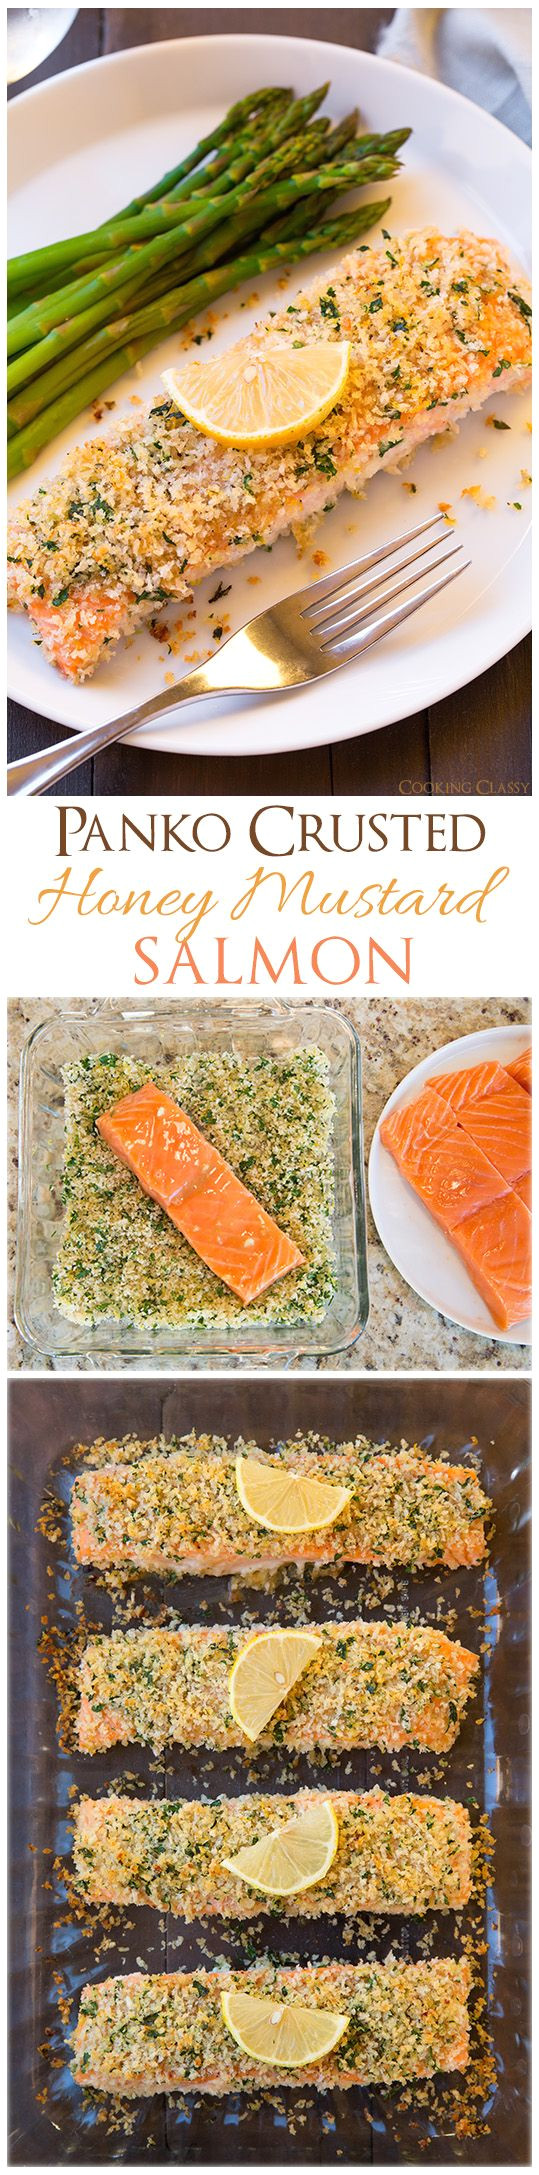 panko crusted honey mustard salmon